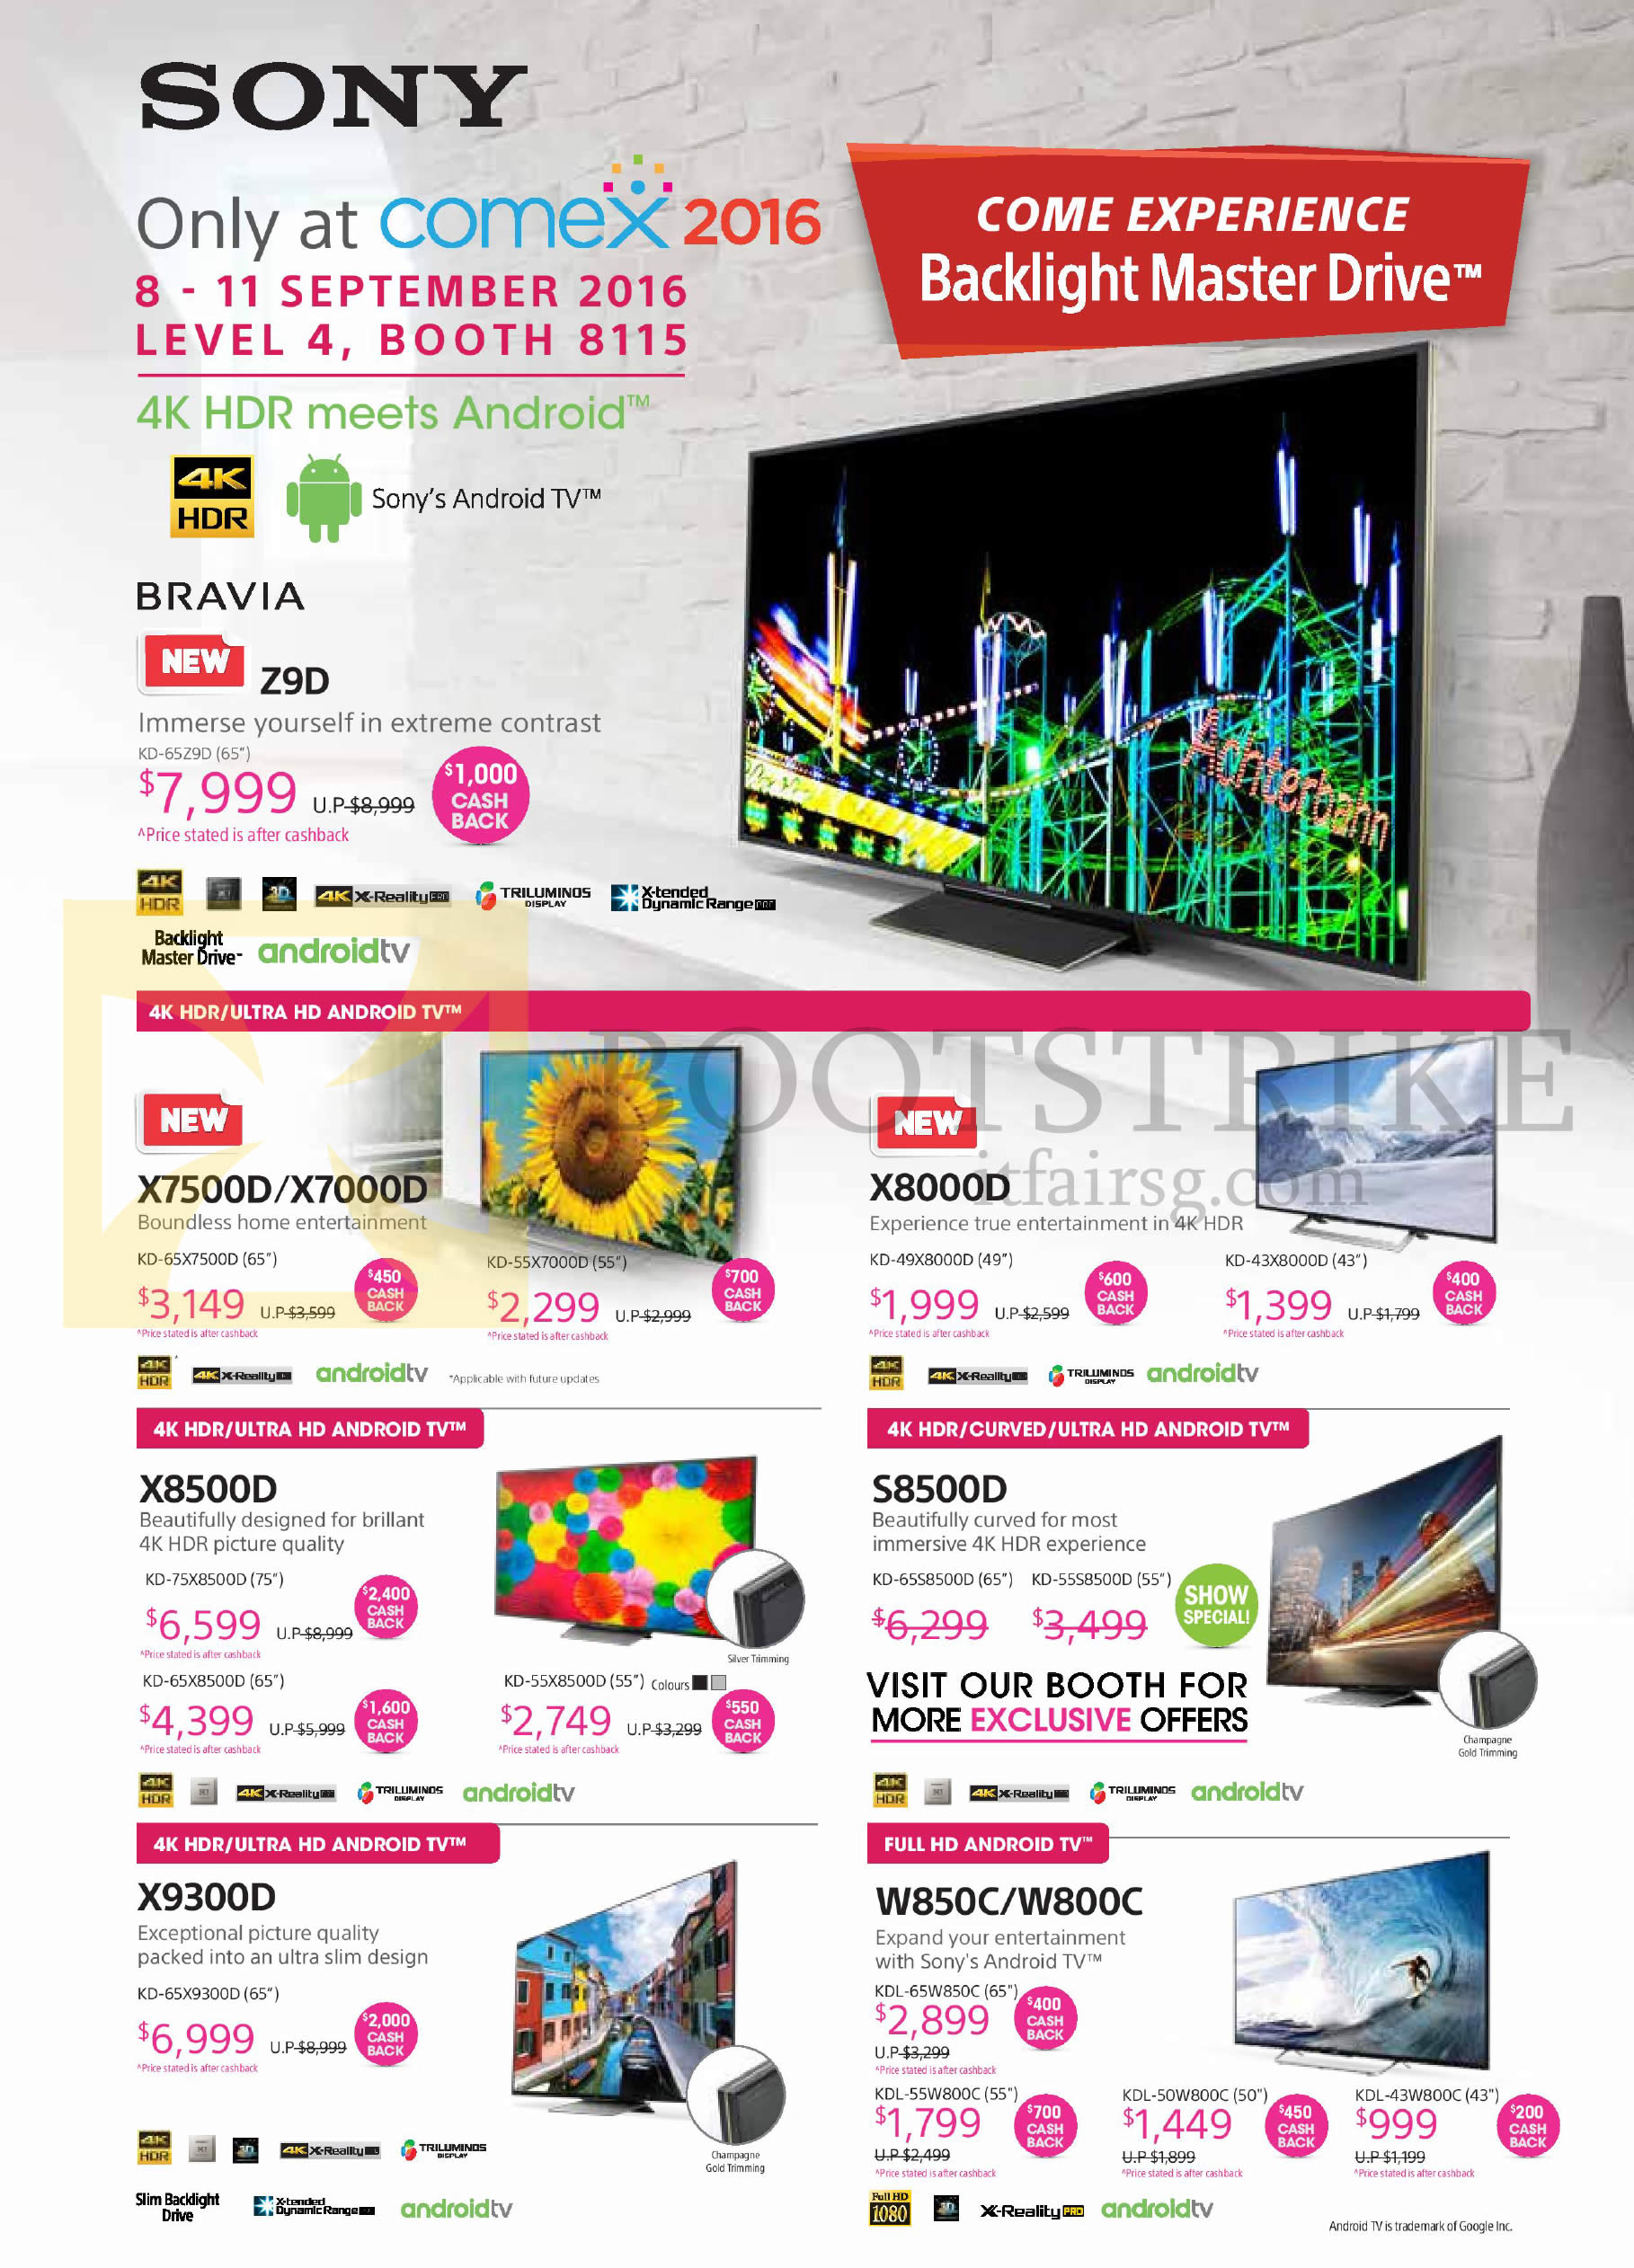 COMEX 2016 price list image brochure of Sony TVs Bravia Z9D, X7500D, X7000D, X8000D, X8500D, S8500D, X9300D, W850C, W800C